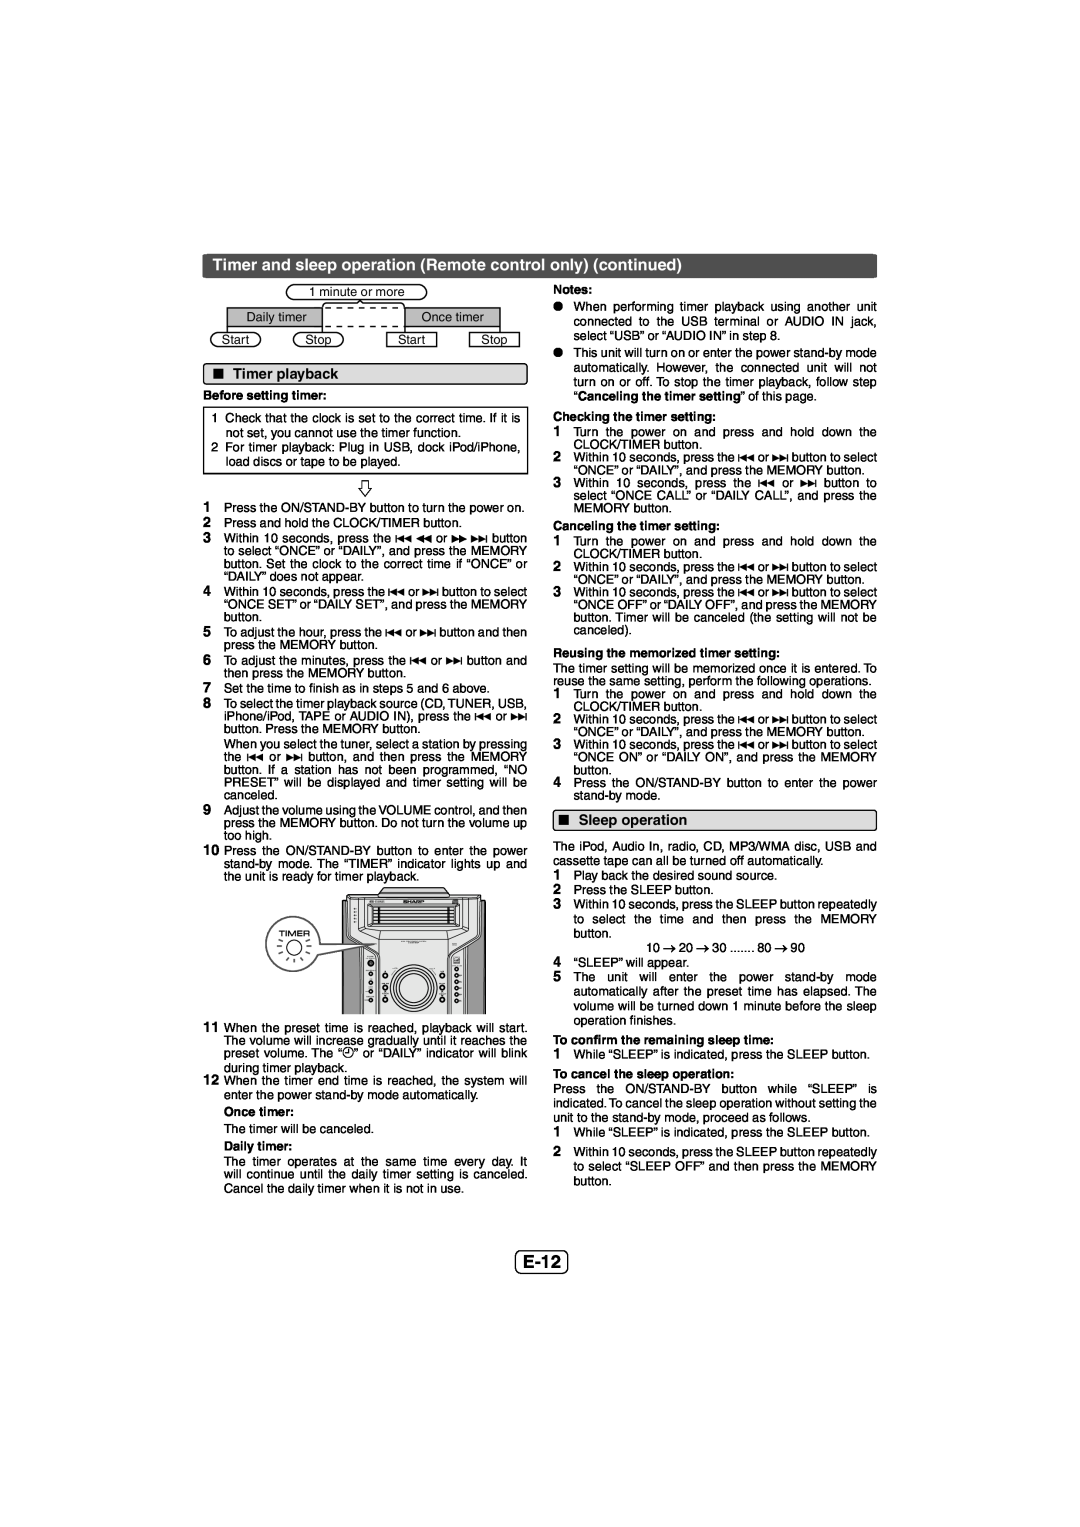 Sharp CD-DH950P operation manual E-12, QTimer playback, QSleep operation 